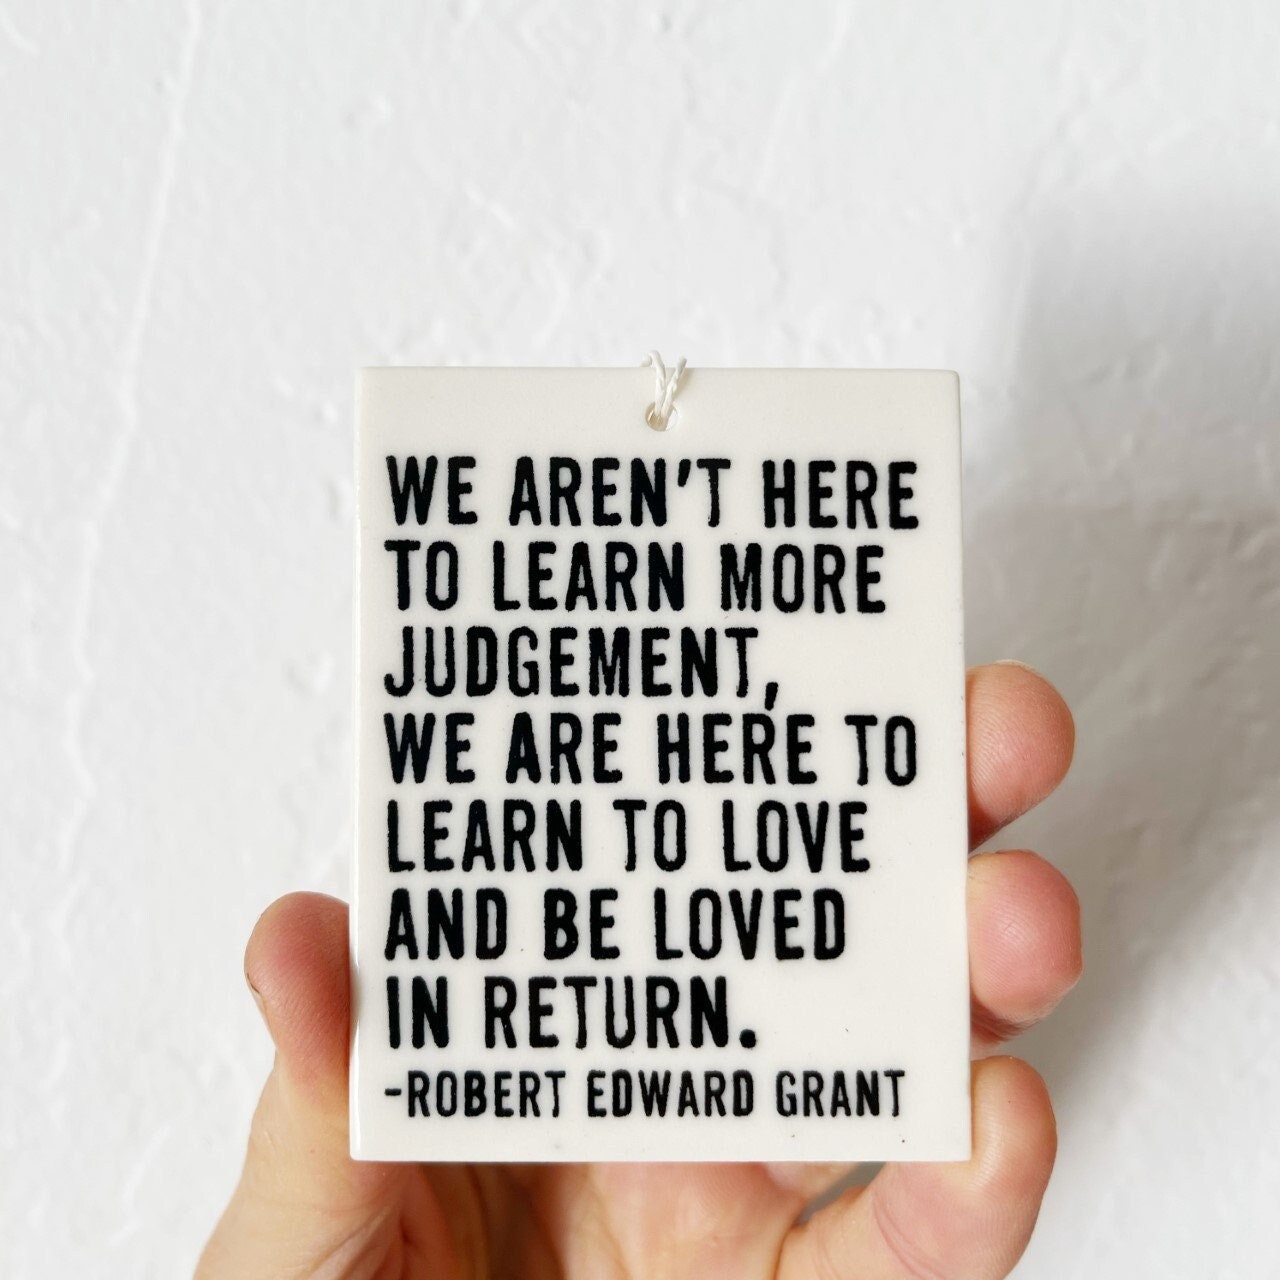 robert edward grant quote ceramic wall tag